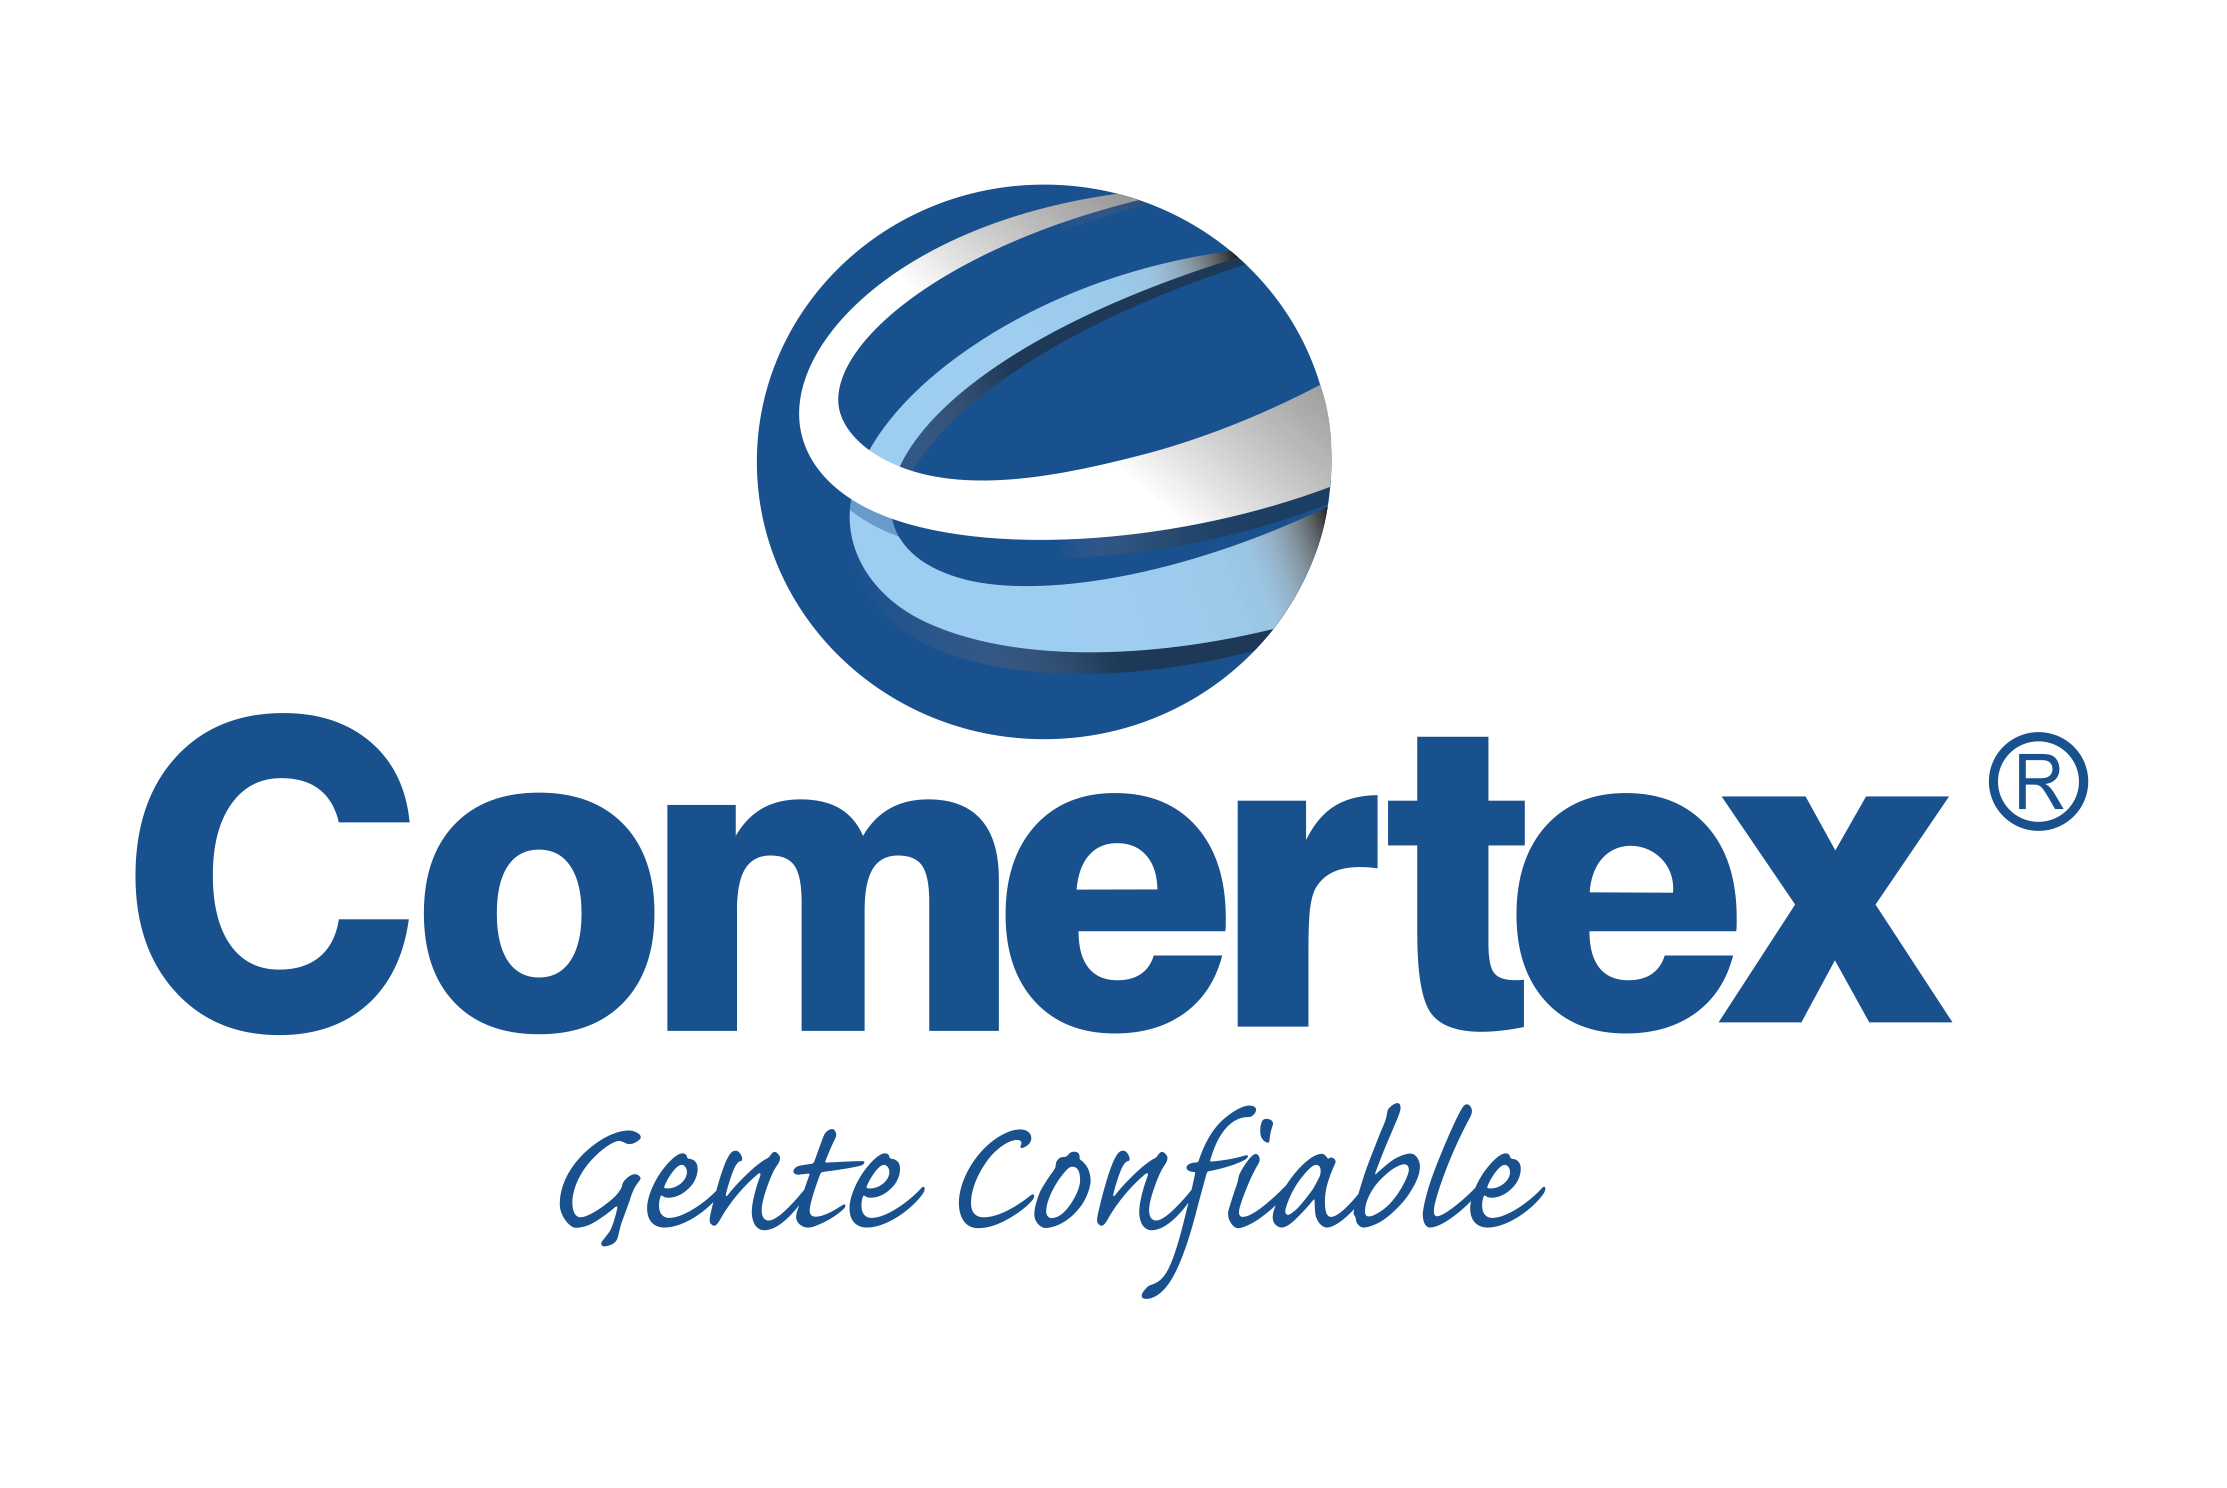 Comertex